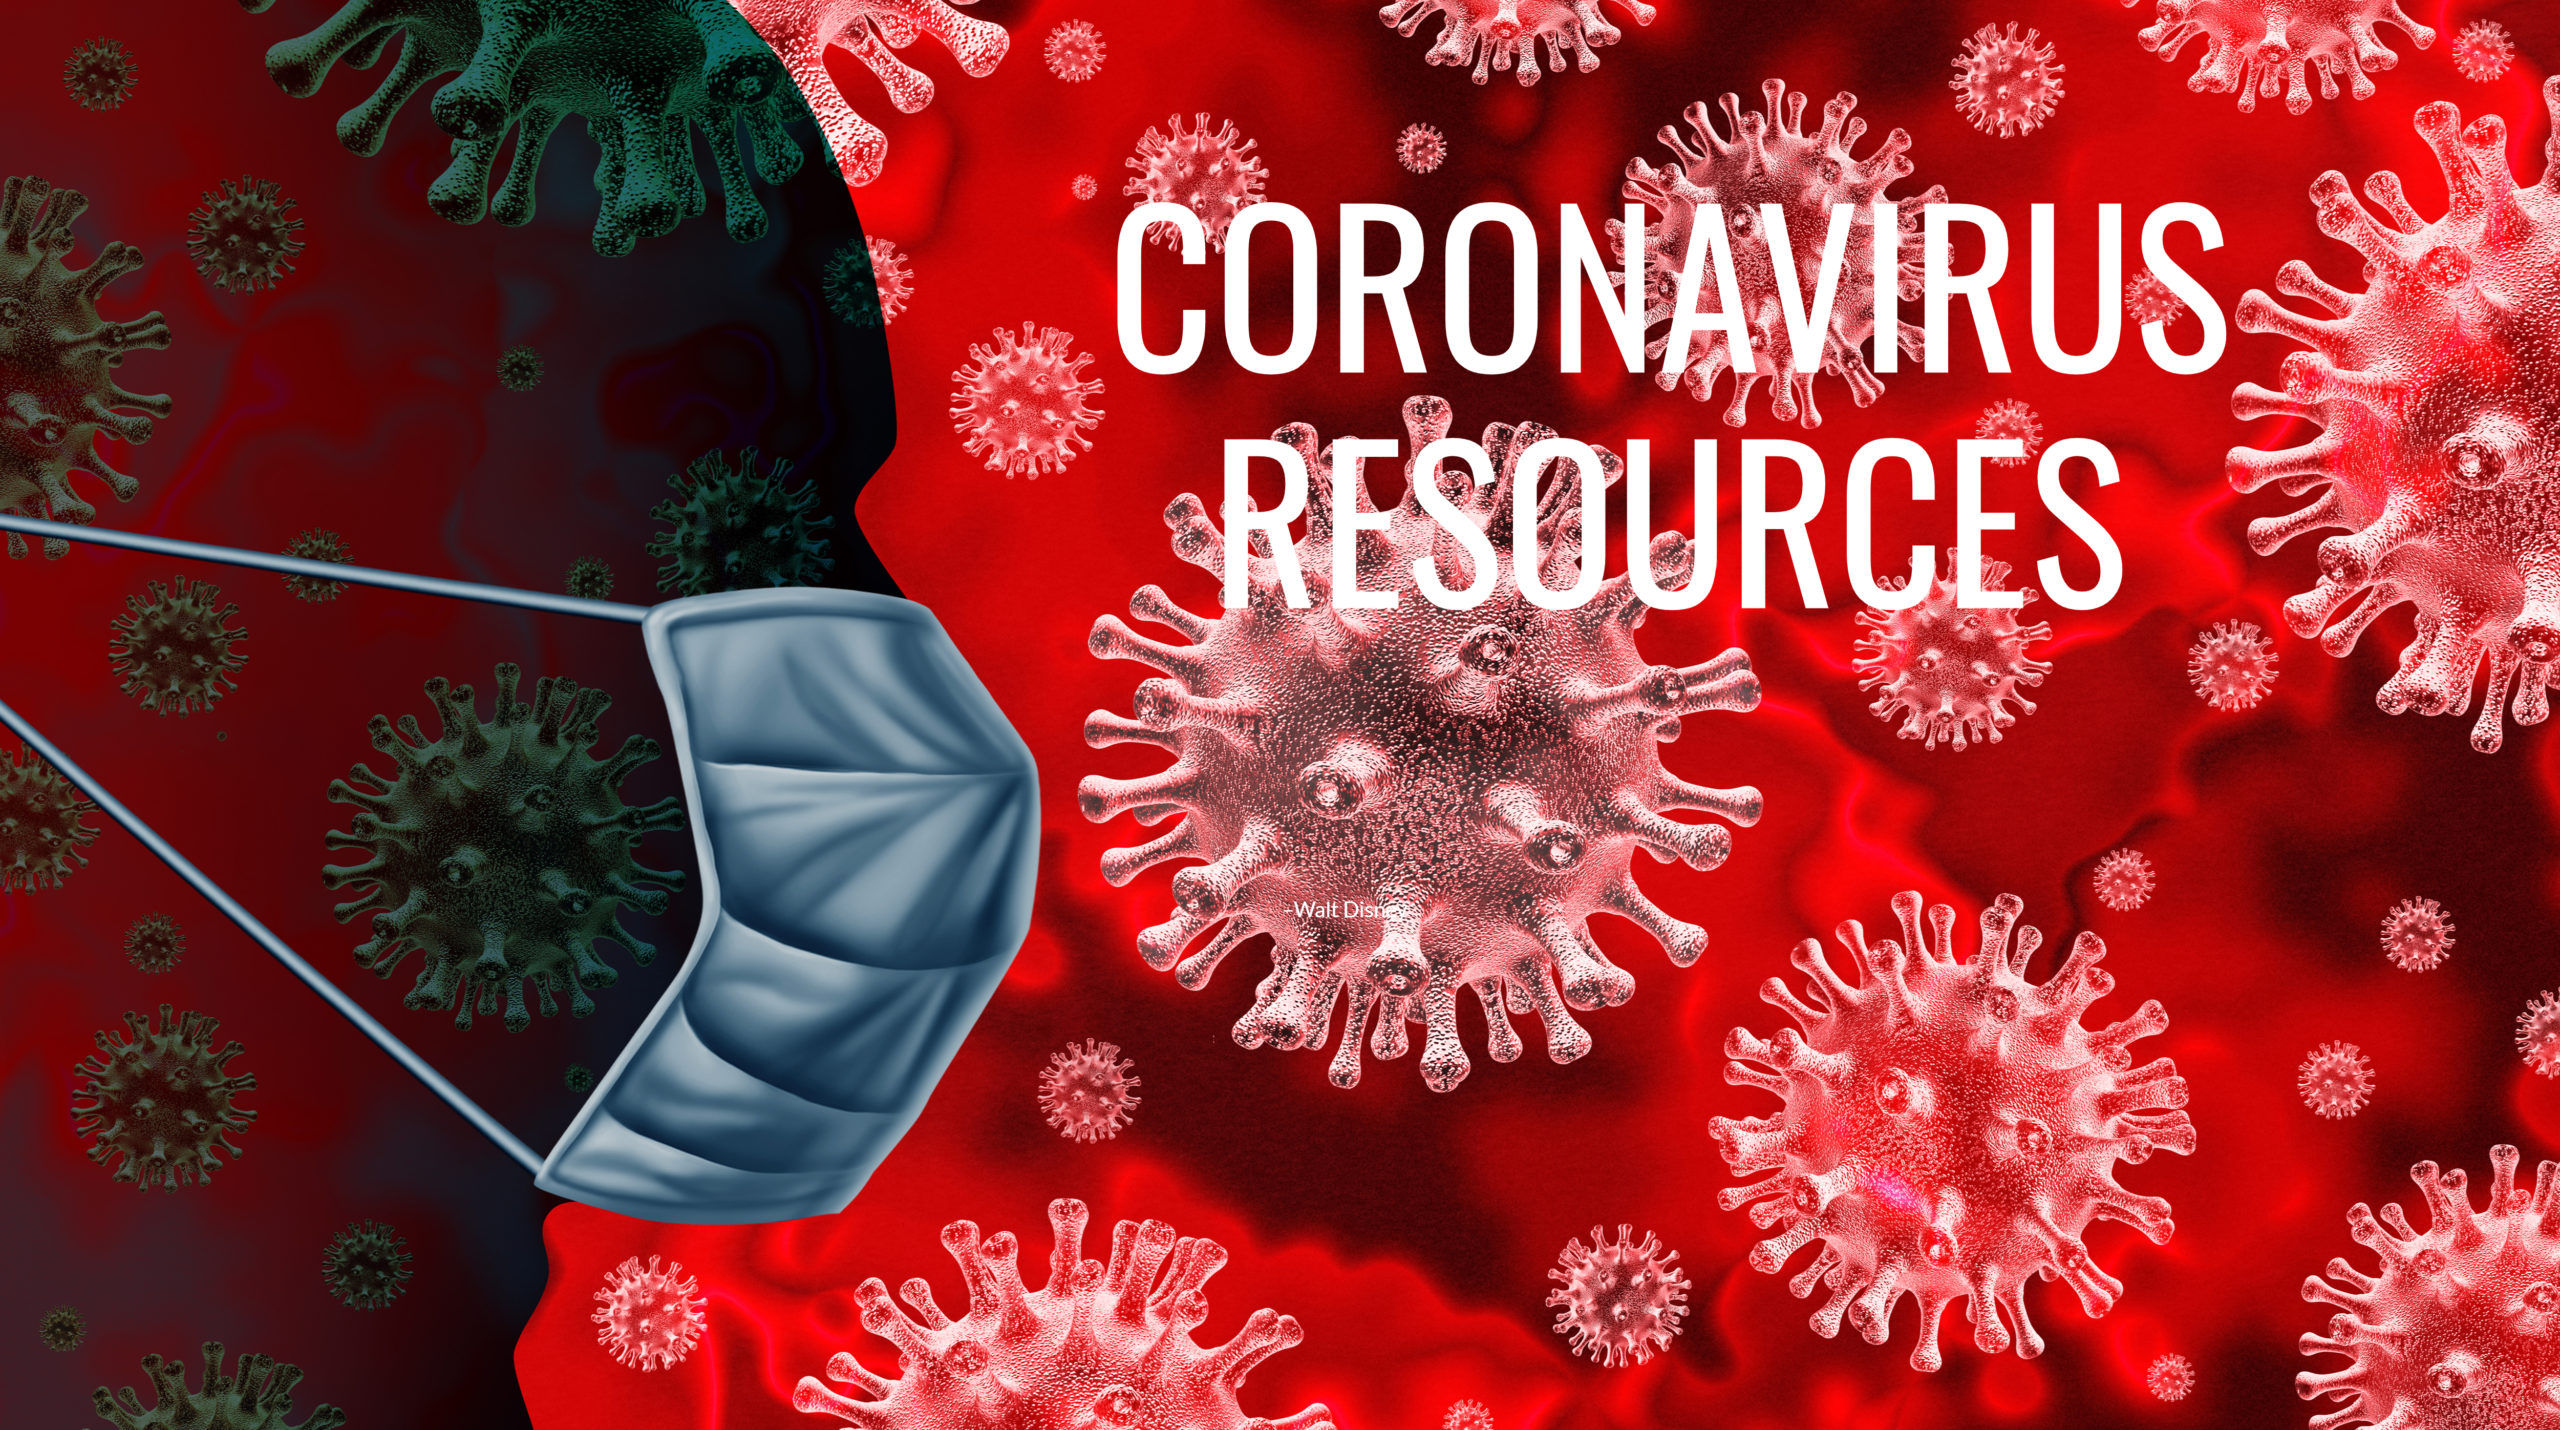 Коронавируса более. Вирус ковид. Картина коронавируса. Короновирусная инфекция. Xarana Viyrus.